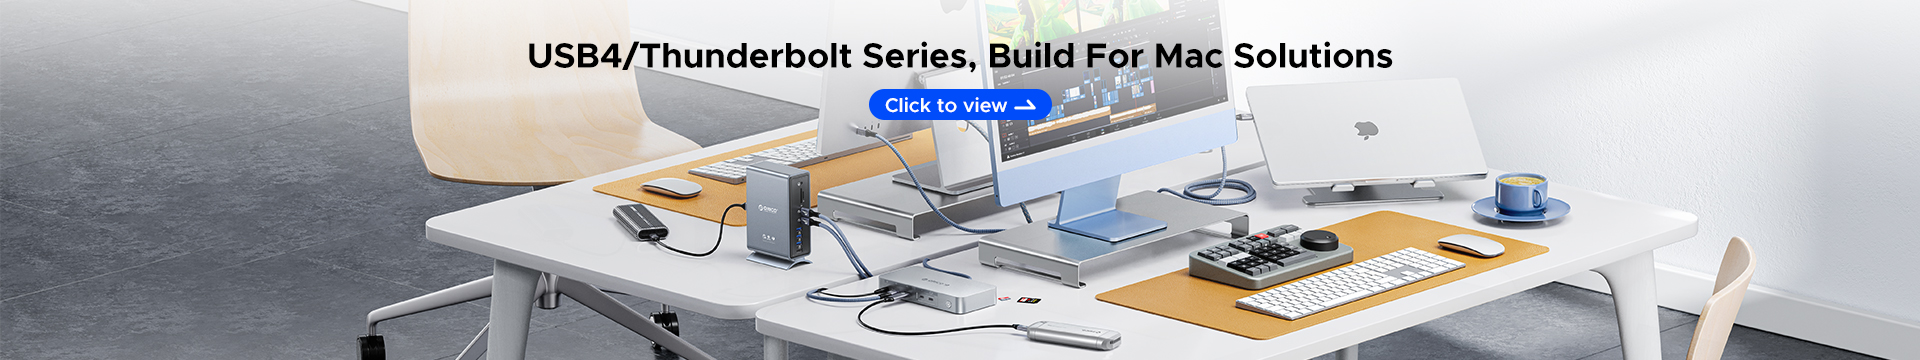 USB4 Thunderbolt Series, Build For Mac Solutions